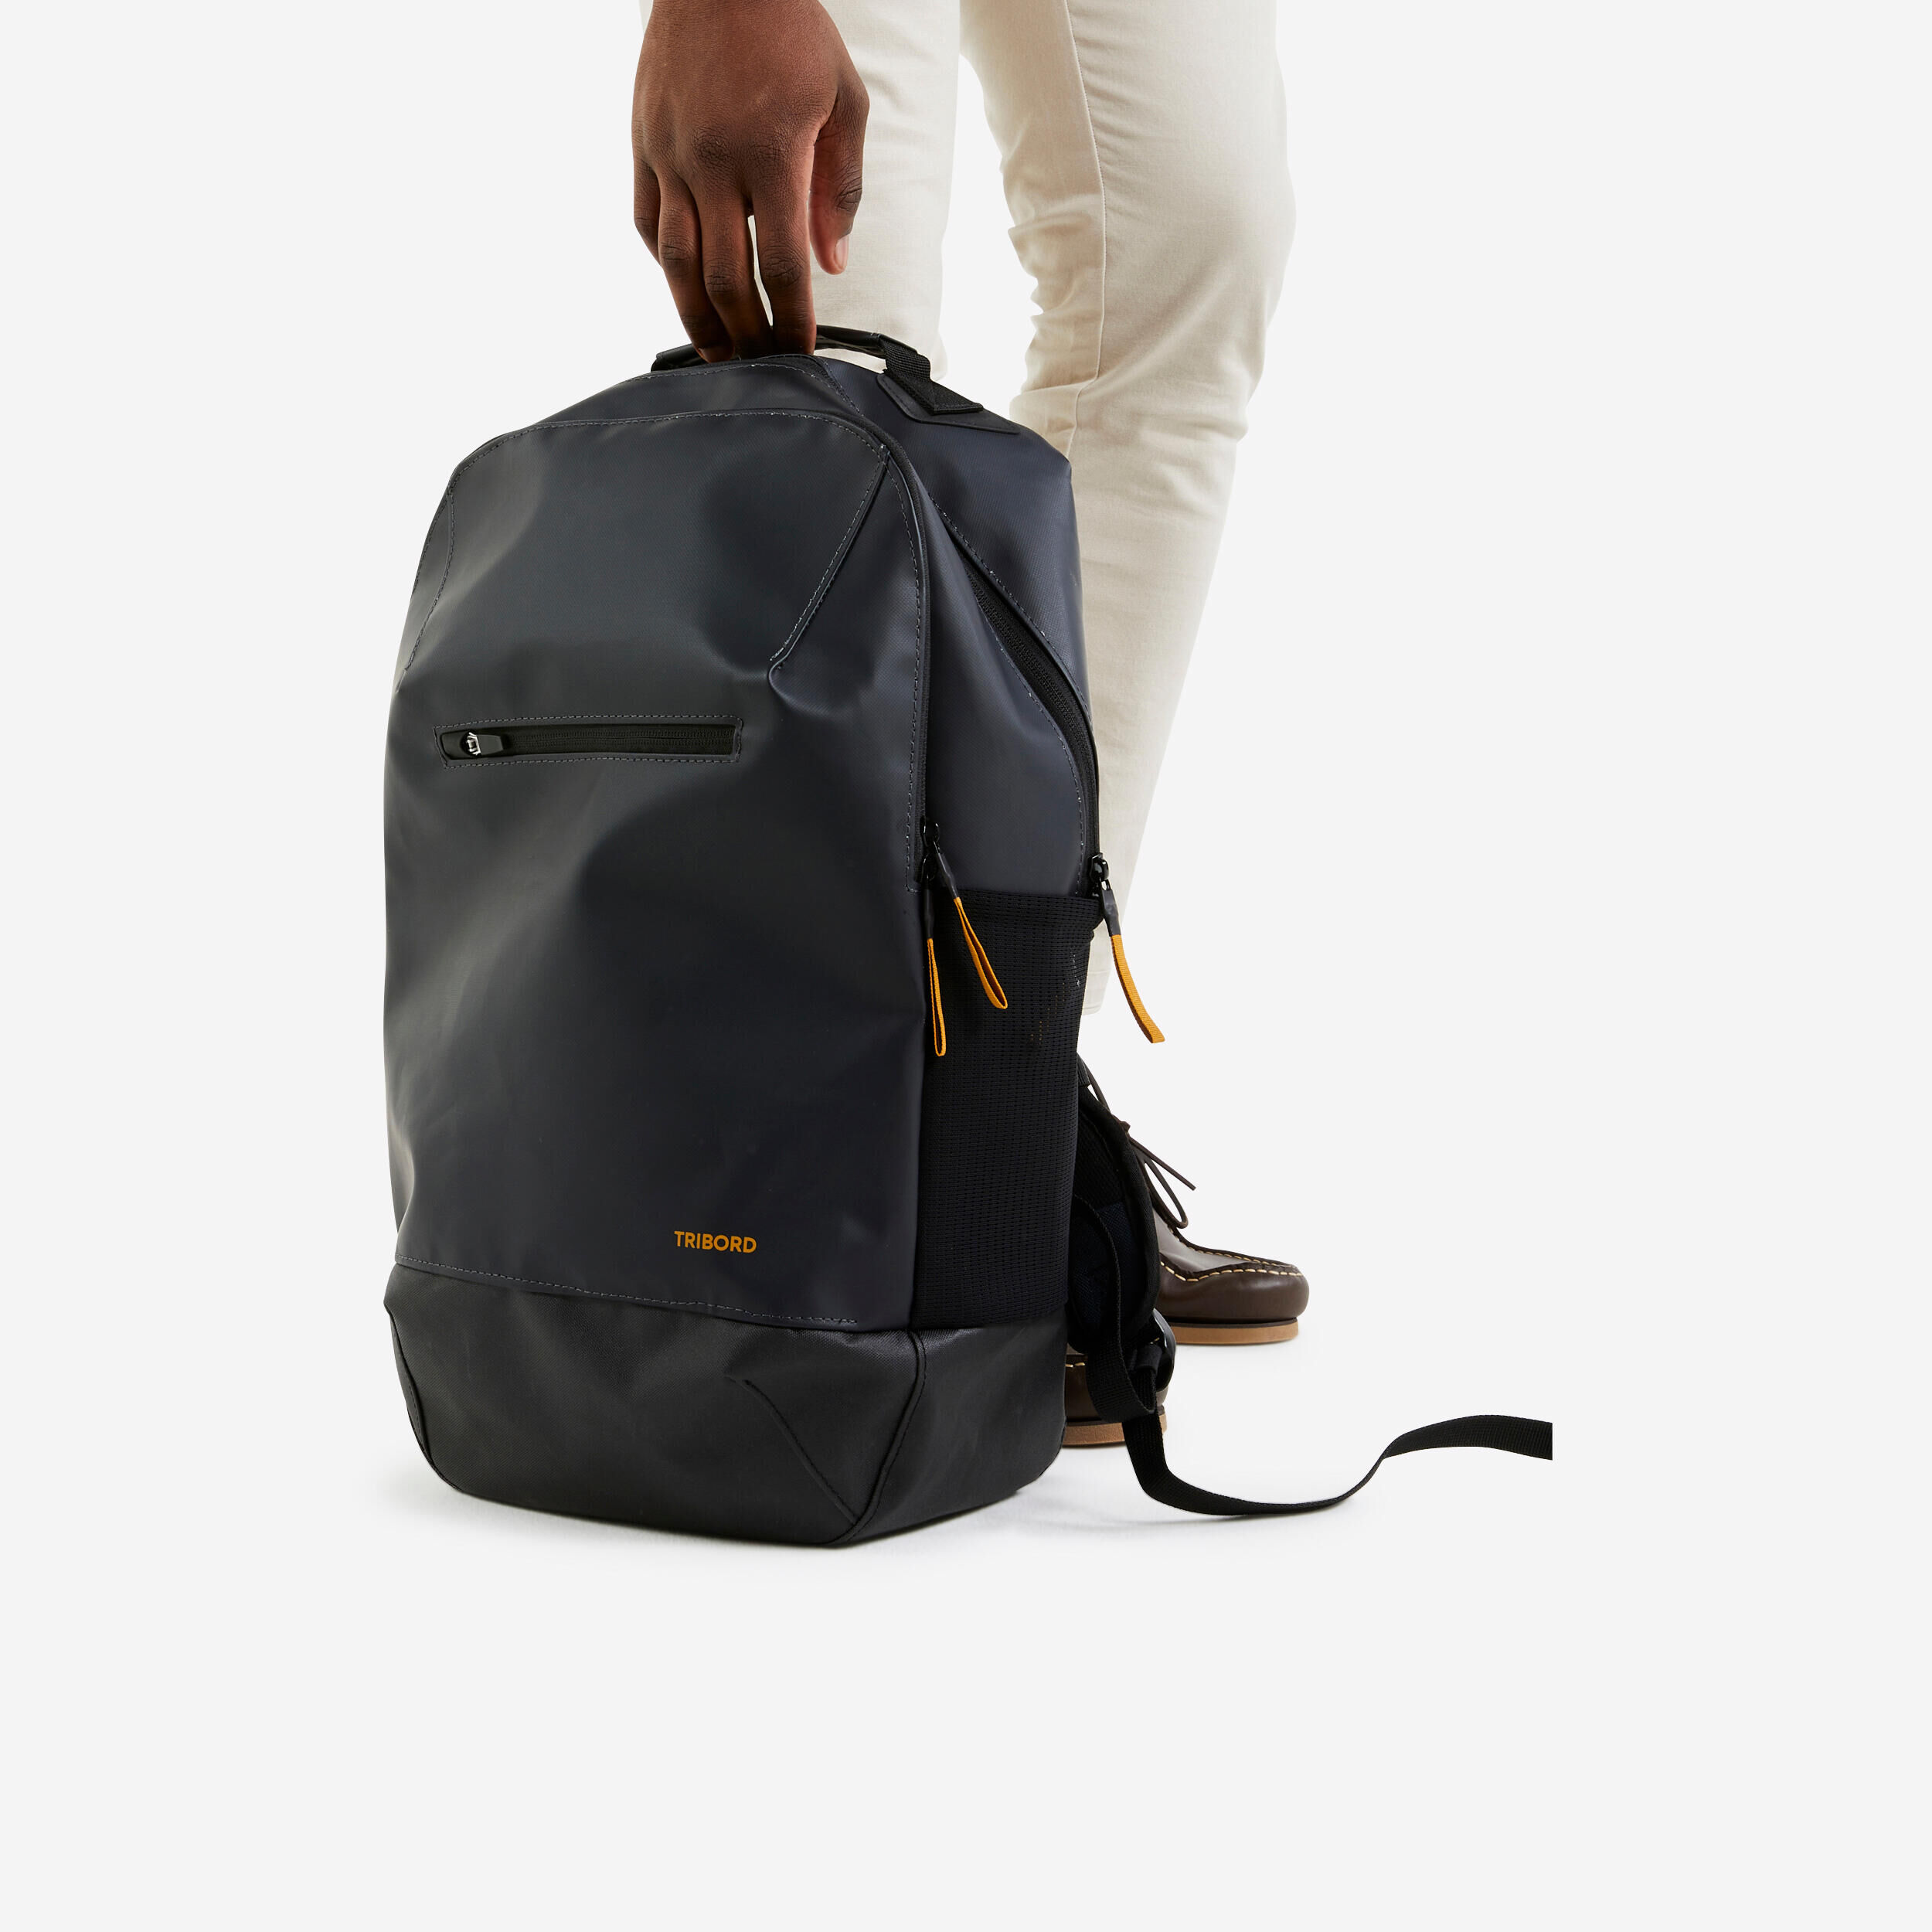 TRIBORD Water-repellent backpack - 25L - Black